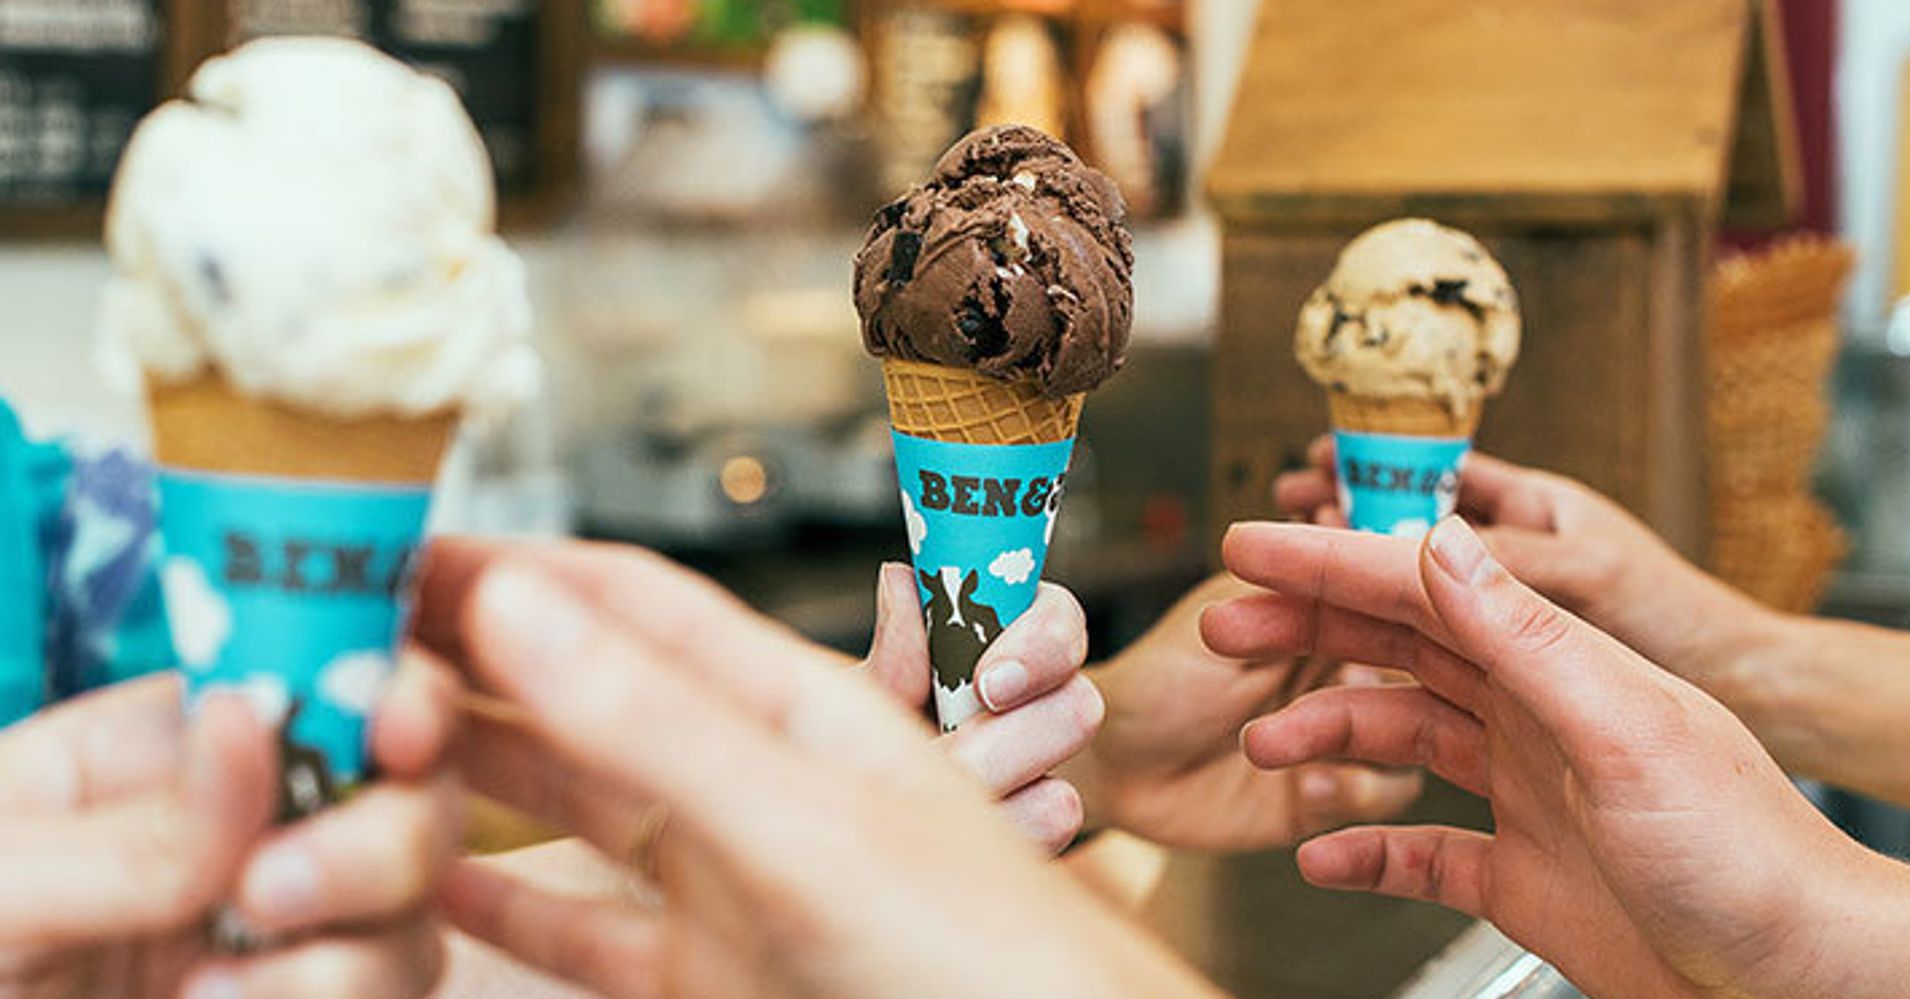 Ben & Jerry's Free Cone Day Makes All Our Ice Cream Dreams Come True